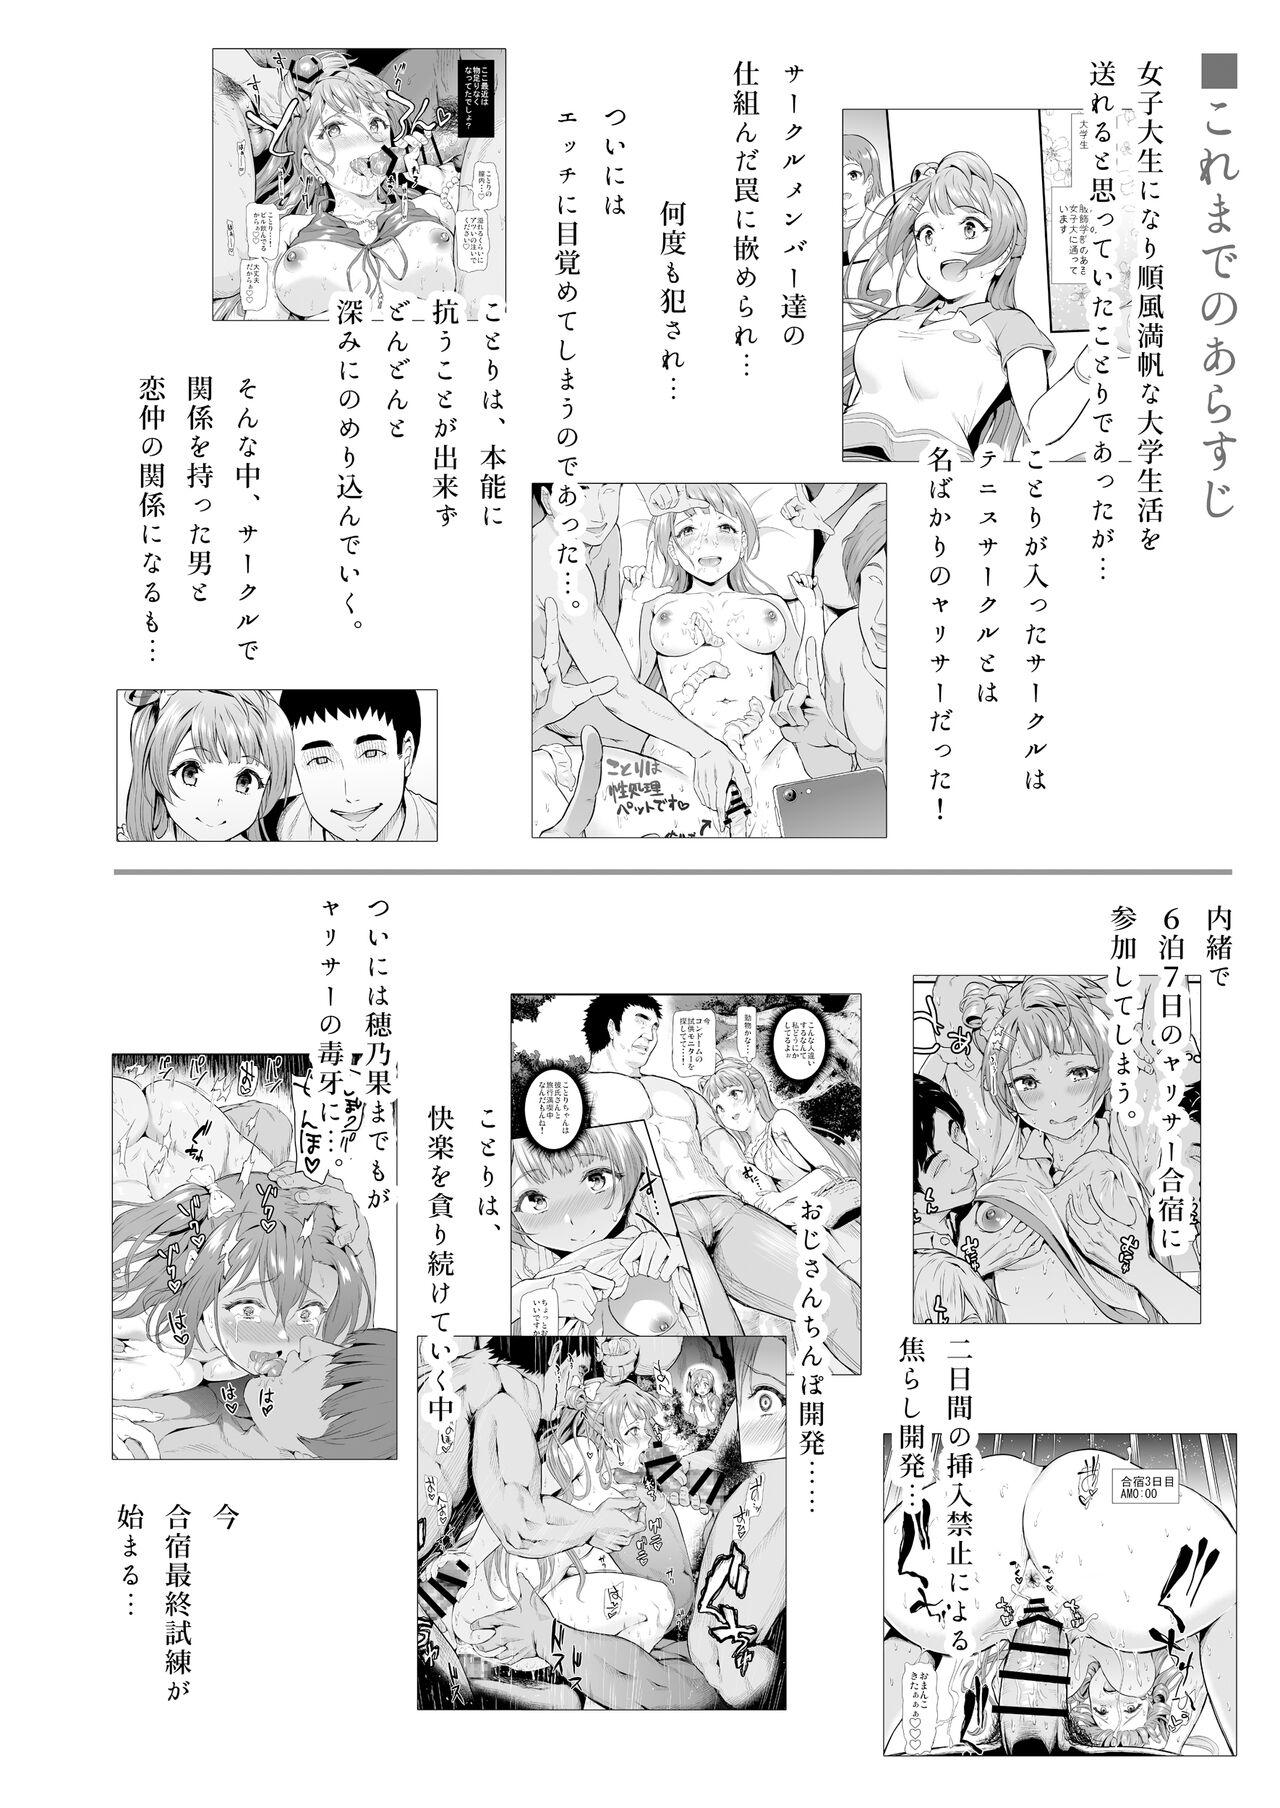 Letsdoeit Joshidaisei Minami Kotori no YariCir Jikenbo Case. 5 - Love live Rubdown - Page 3